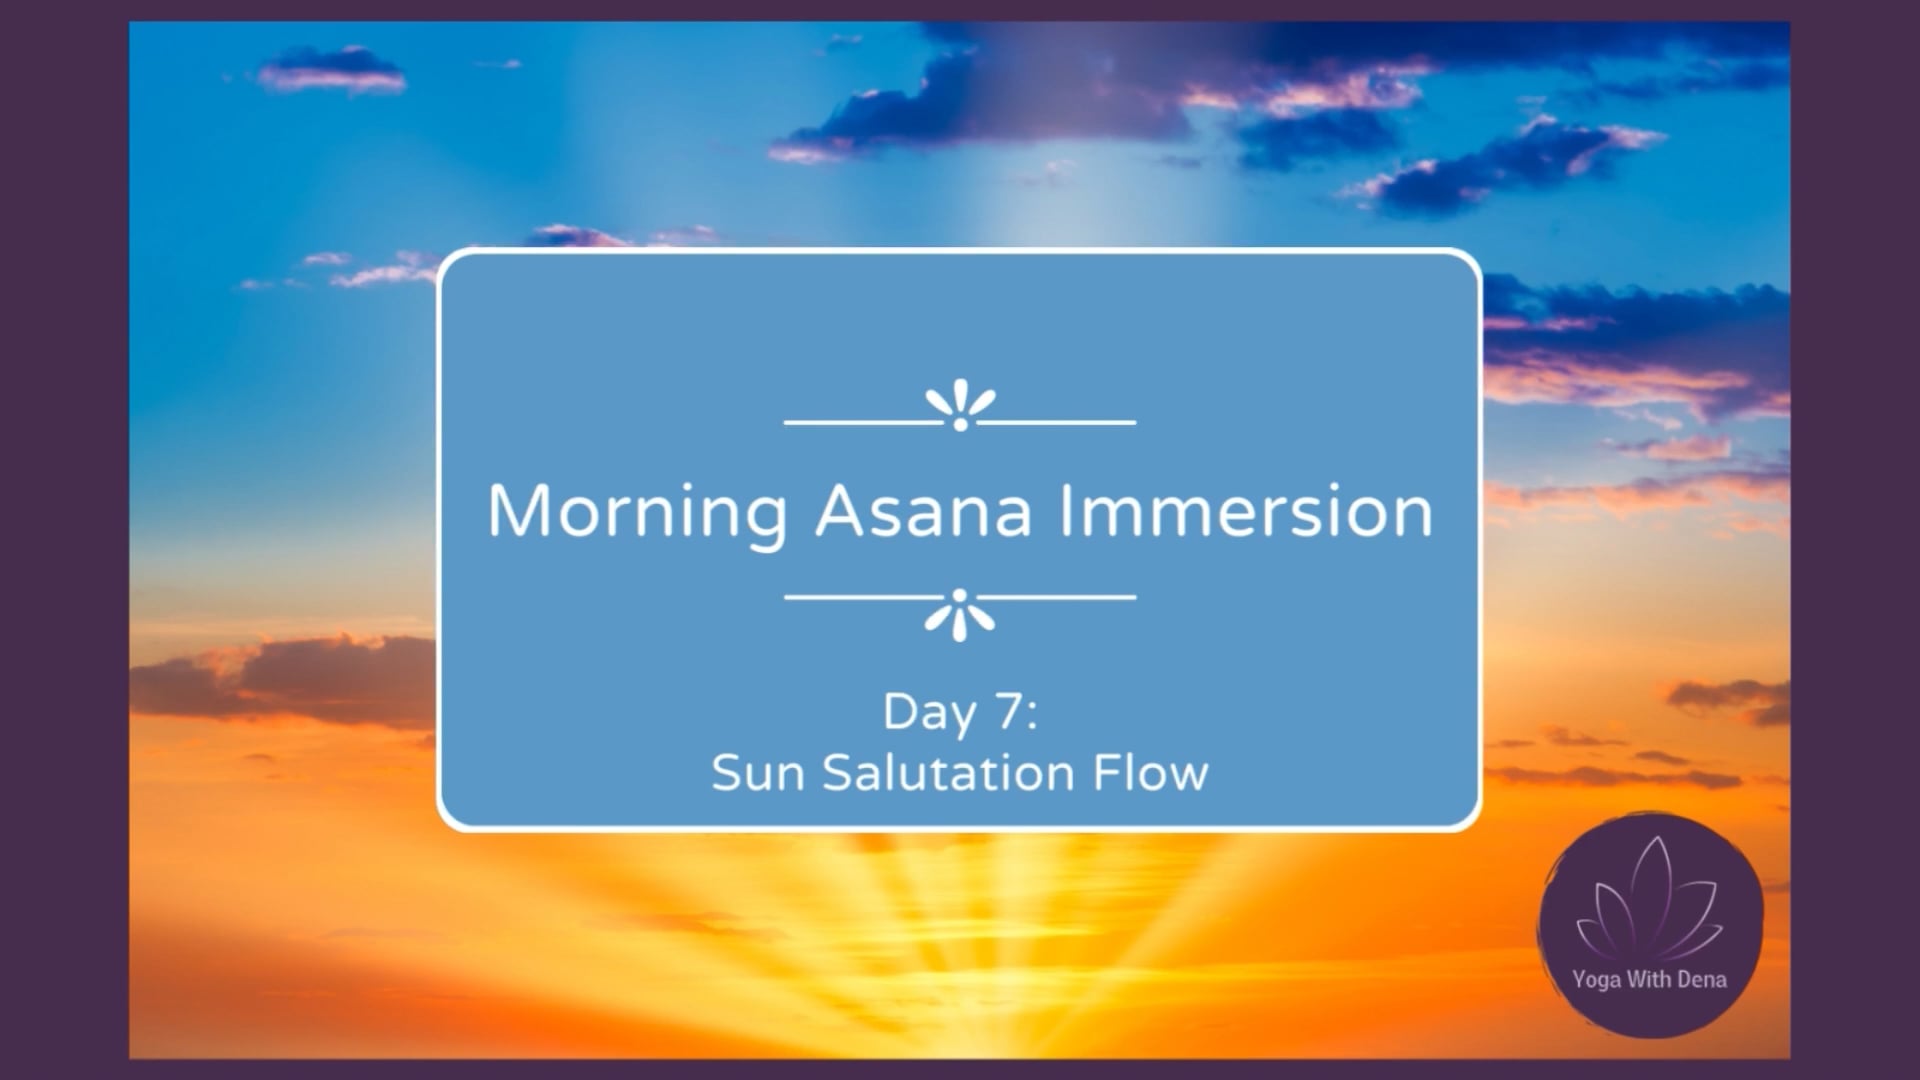 Day 7 - Morning Asana Immersion